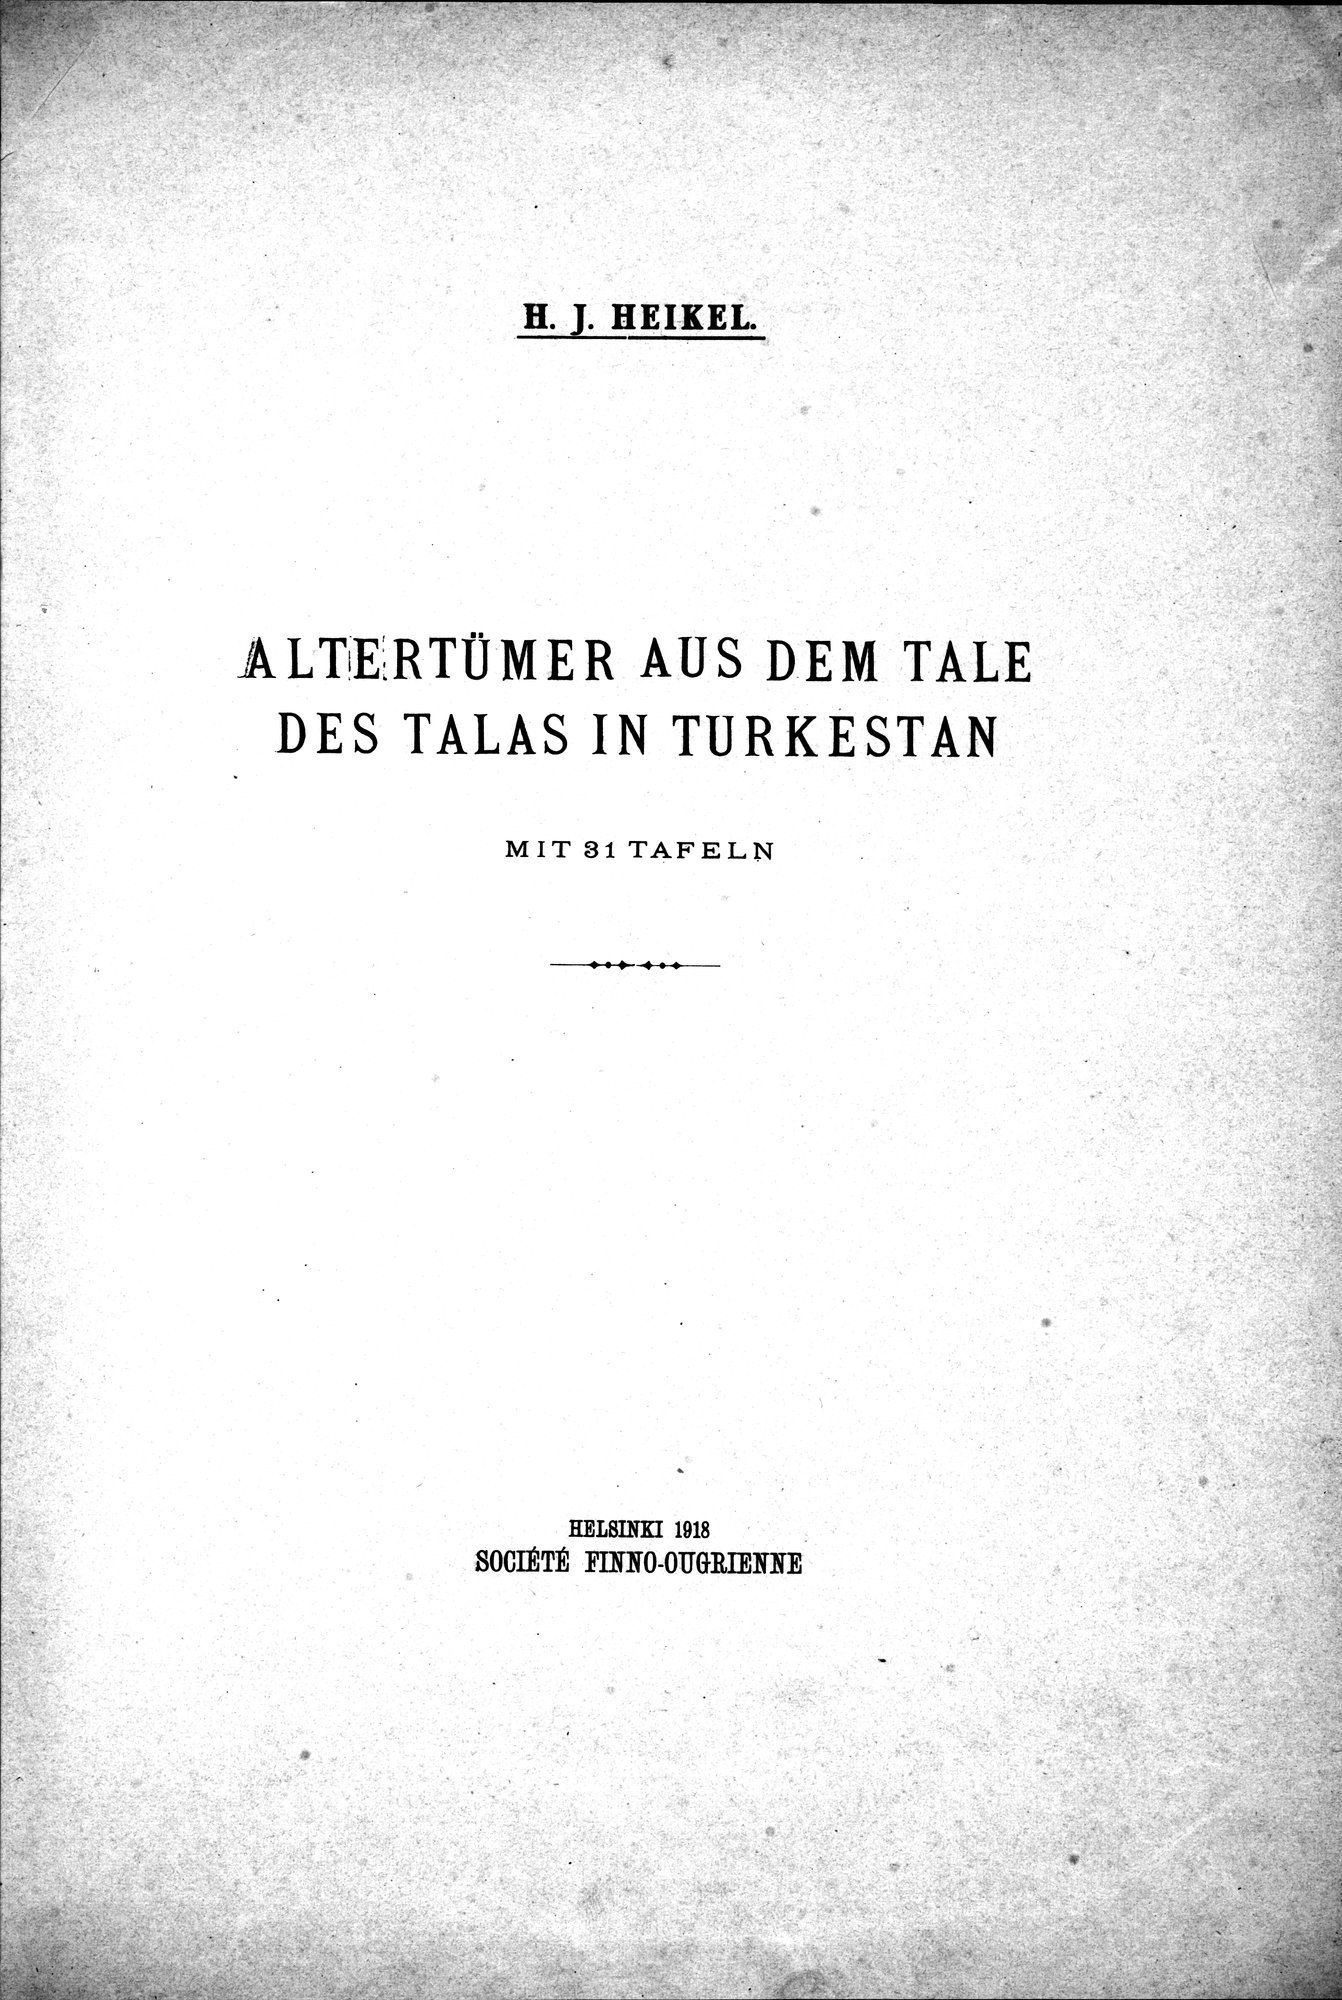 Altertümer aus dem Tale des Talas in Turkestan : vol.1 / Page 11 (Grayscale High Resolution Image)